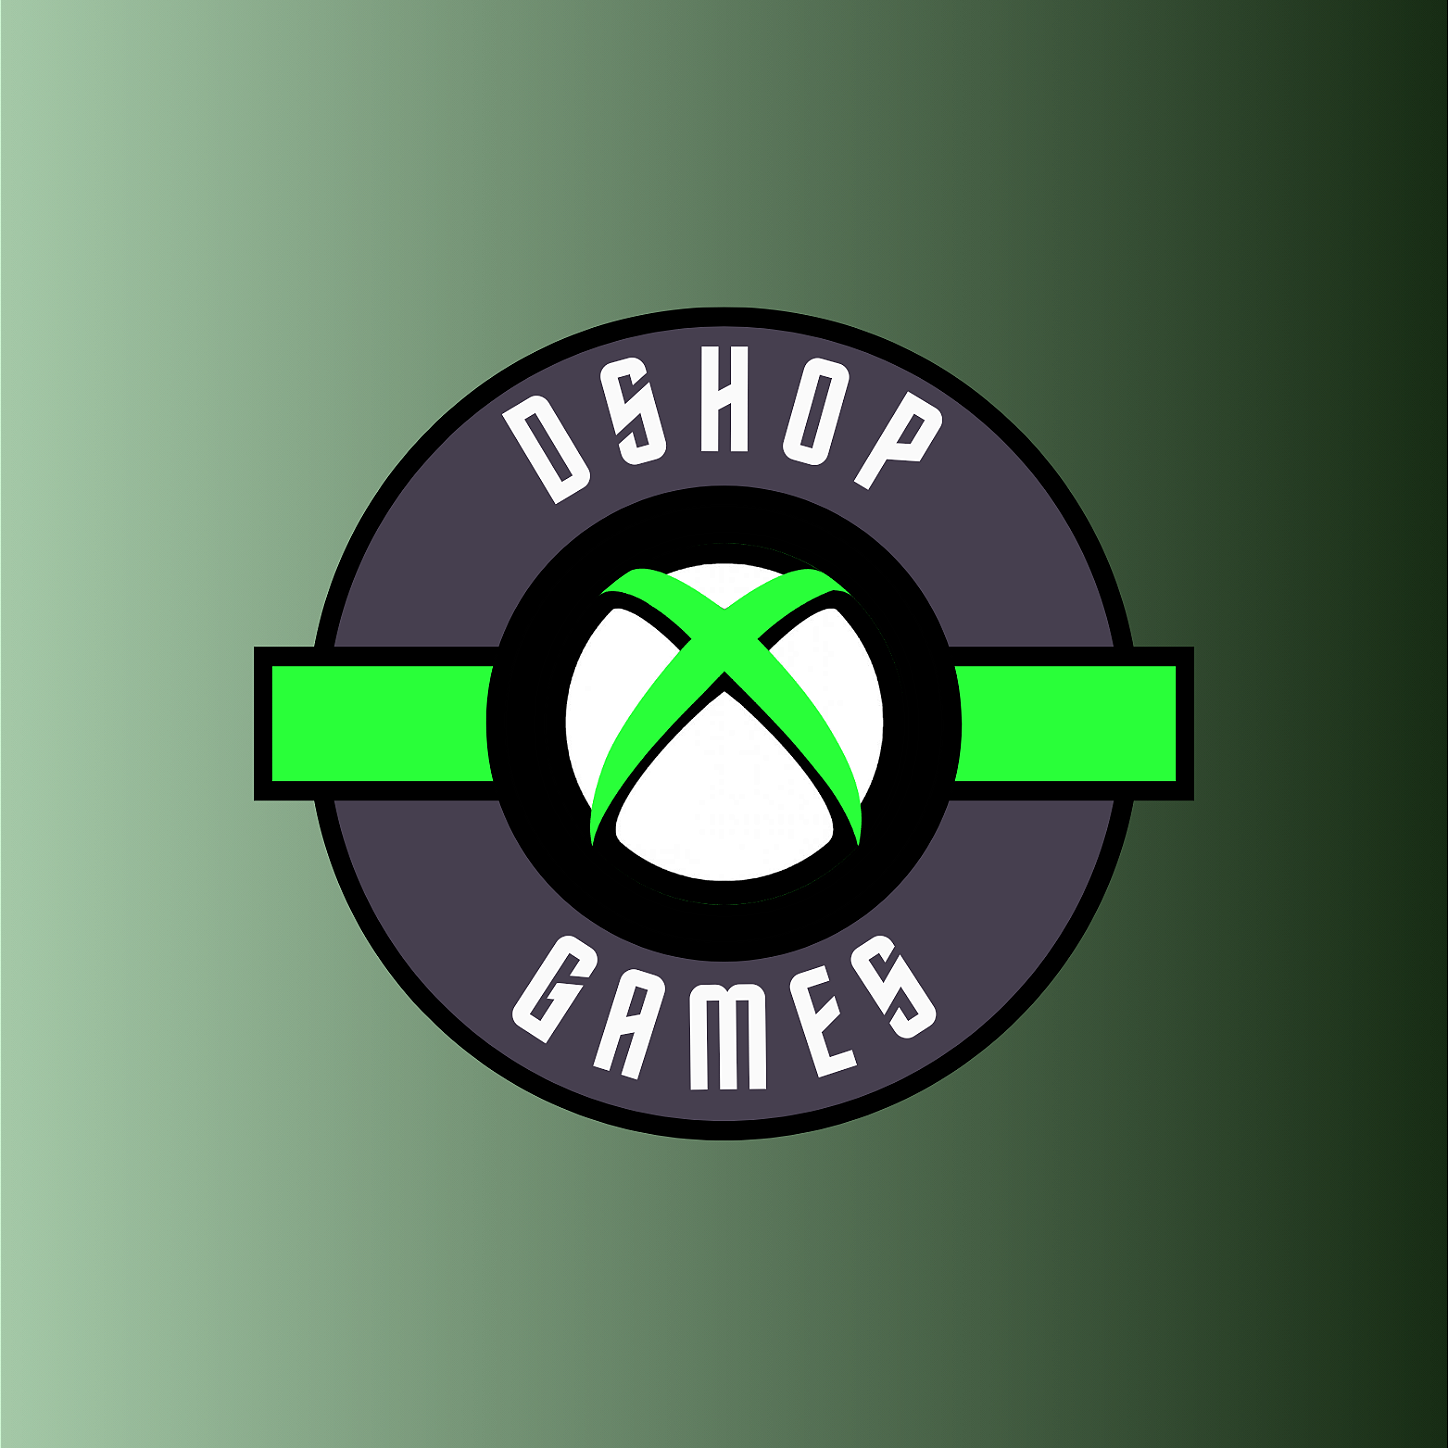 Dshop Games